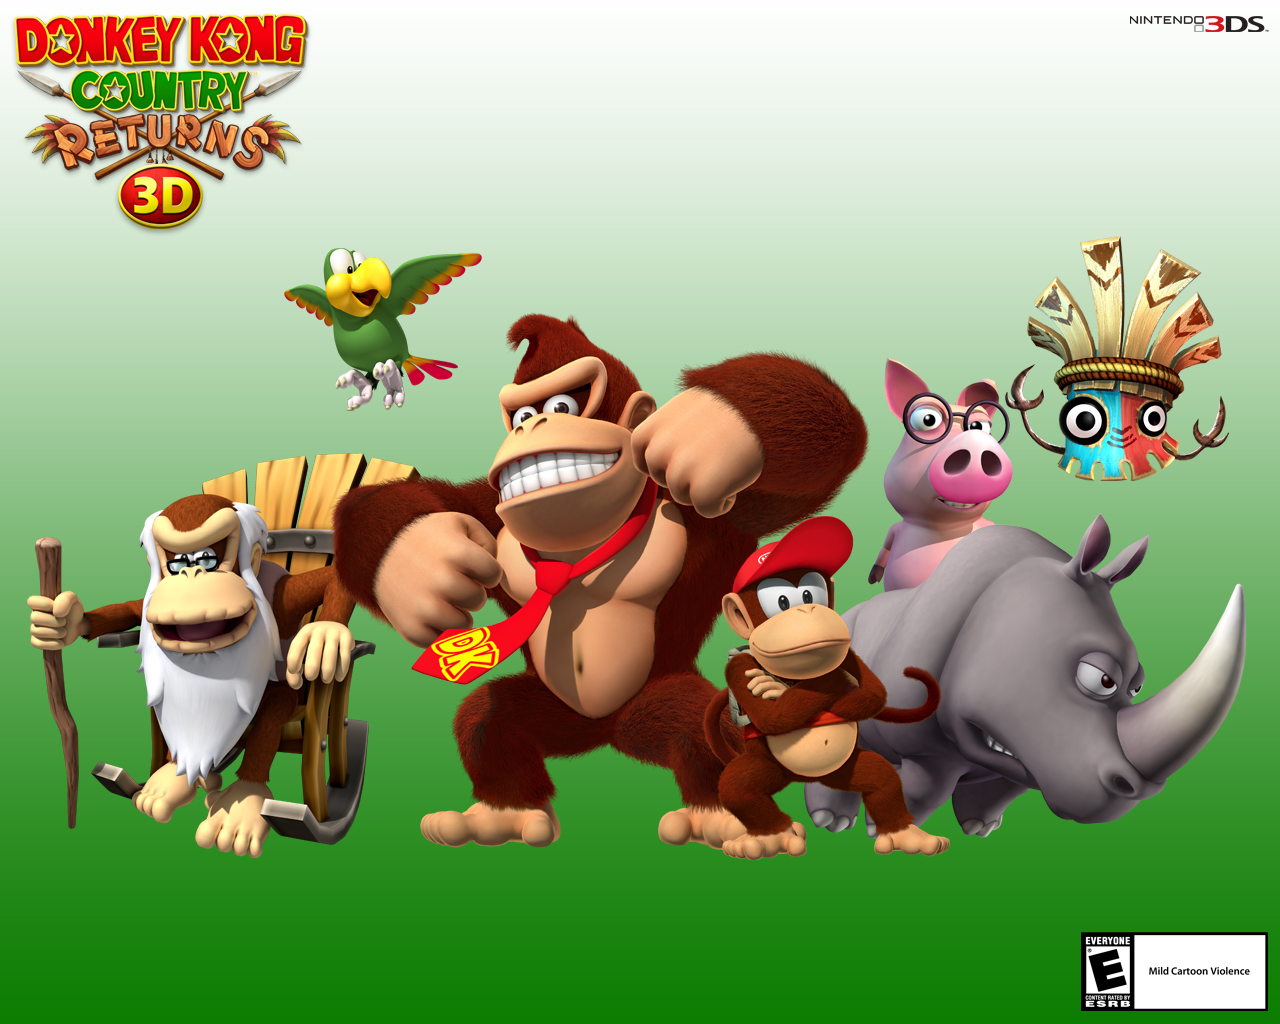 Wallpaper Donkey Kong Country Returns 3d For Nintendo 3ds